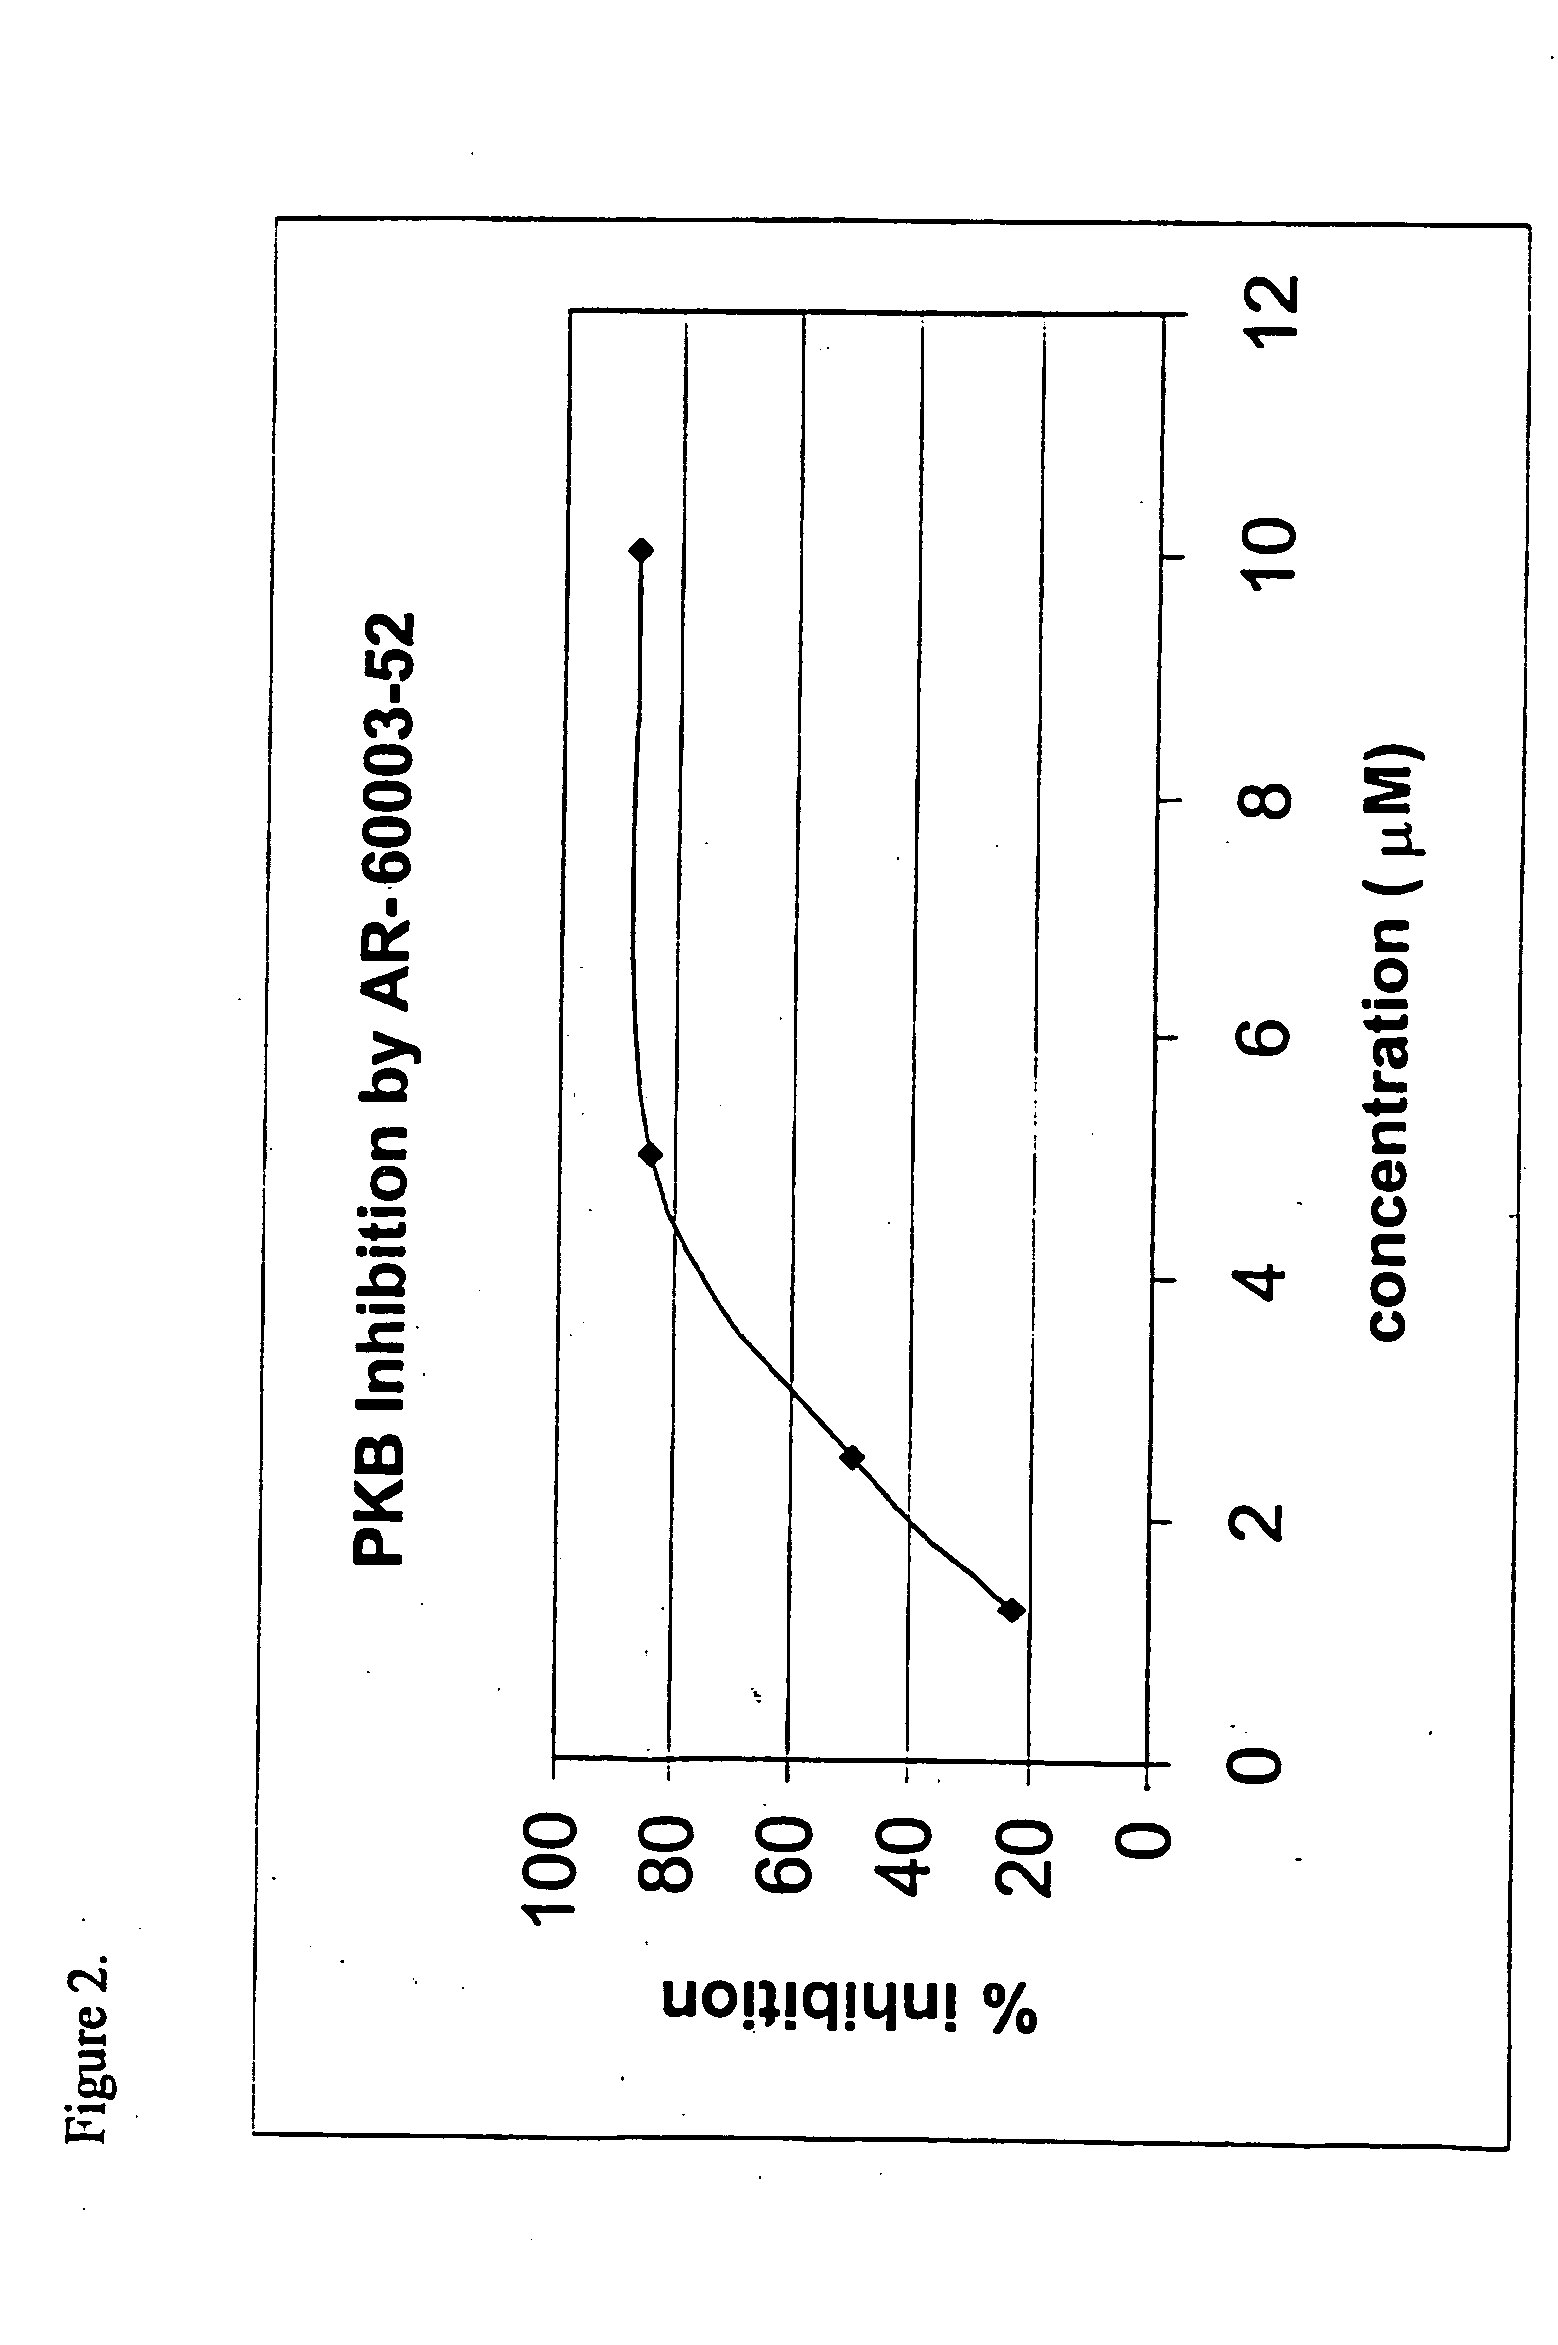 Protein kinase inhibitors comprising ATP mimetics conjugated to peptides or pertidomimetics